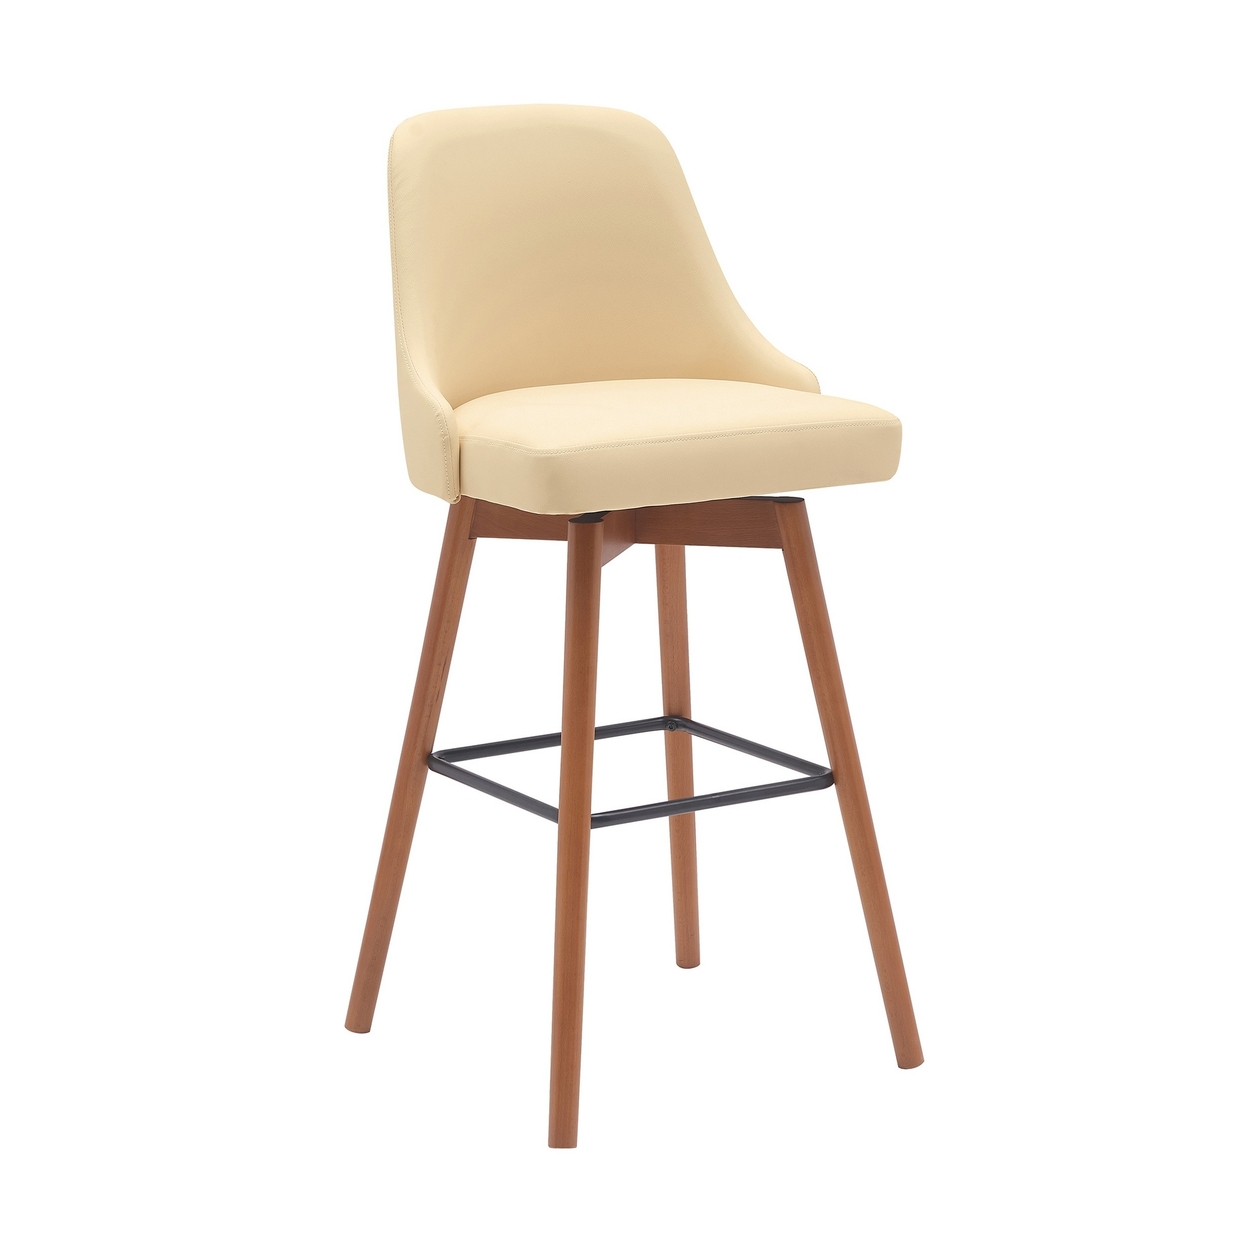 Sean 30 Inch Barstool Chair, Swivel Parson, Cream Faux Leather Walnut Brown - Saltoro Sherpi